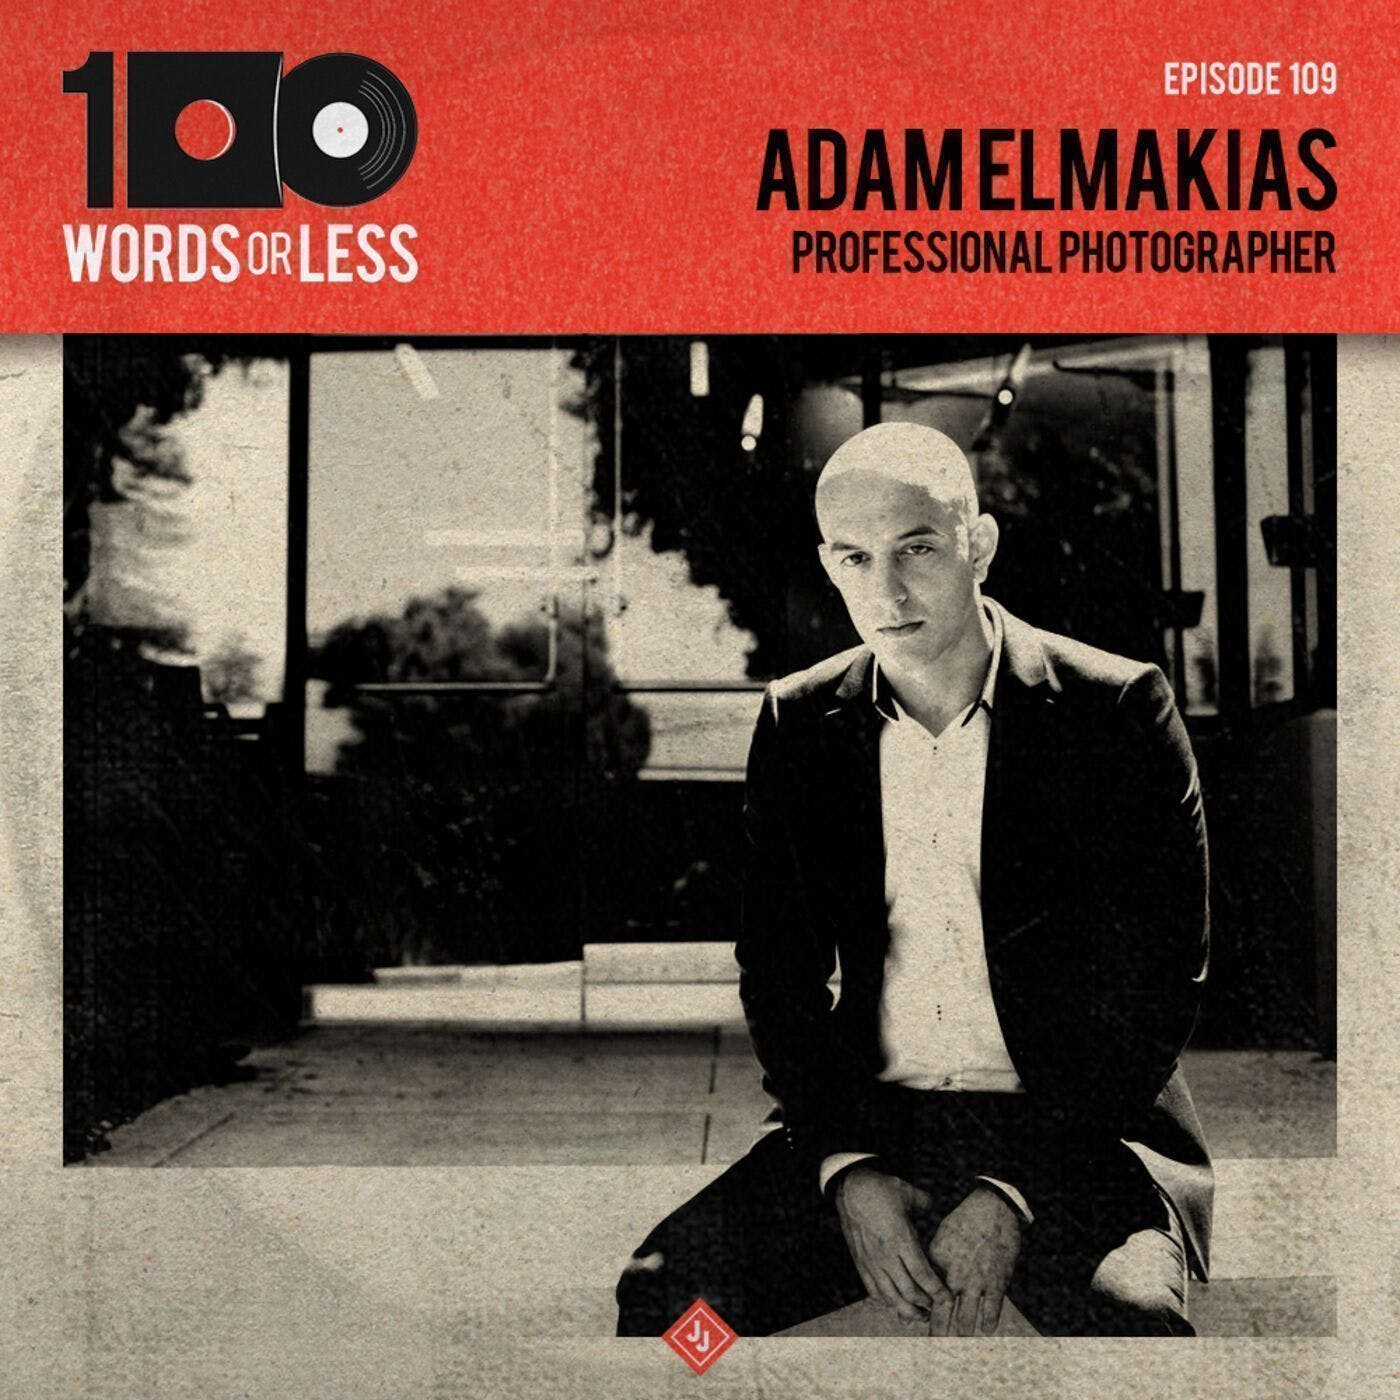 Adam Elmakias, professional photographer